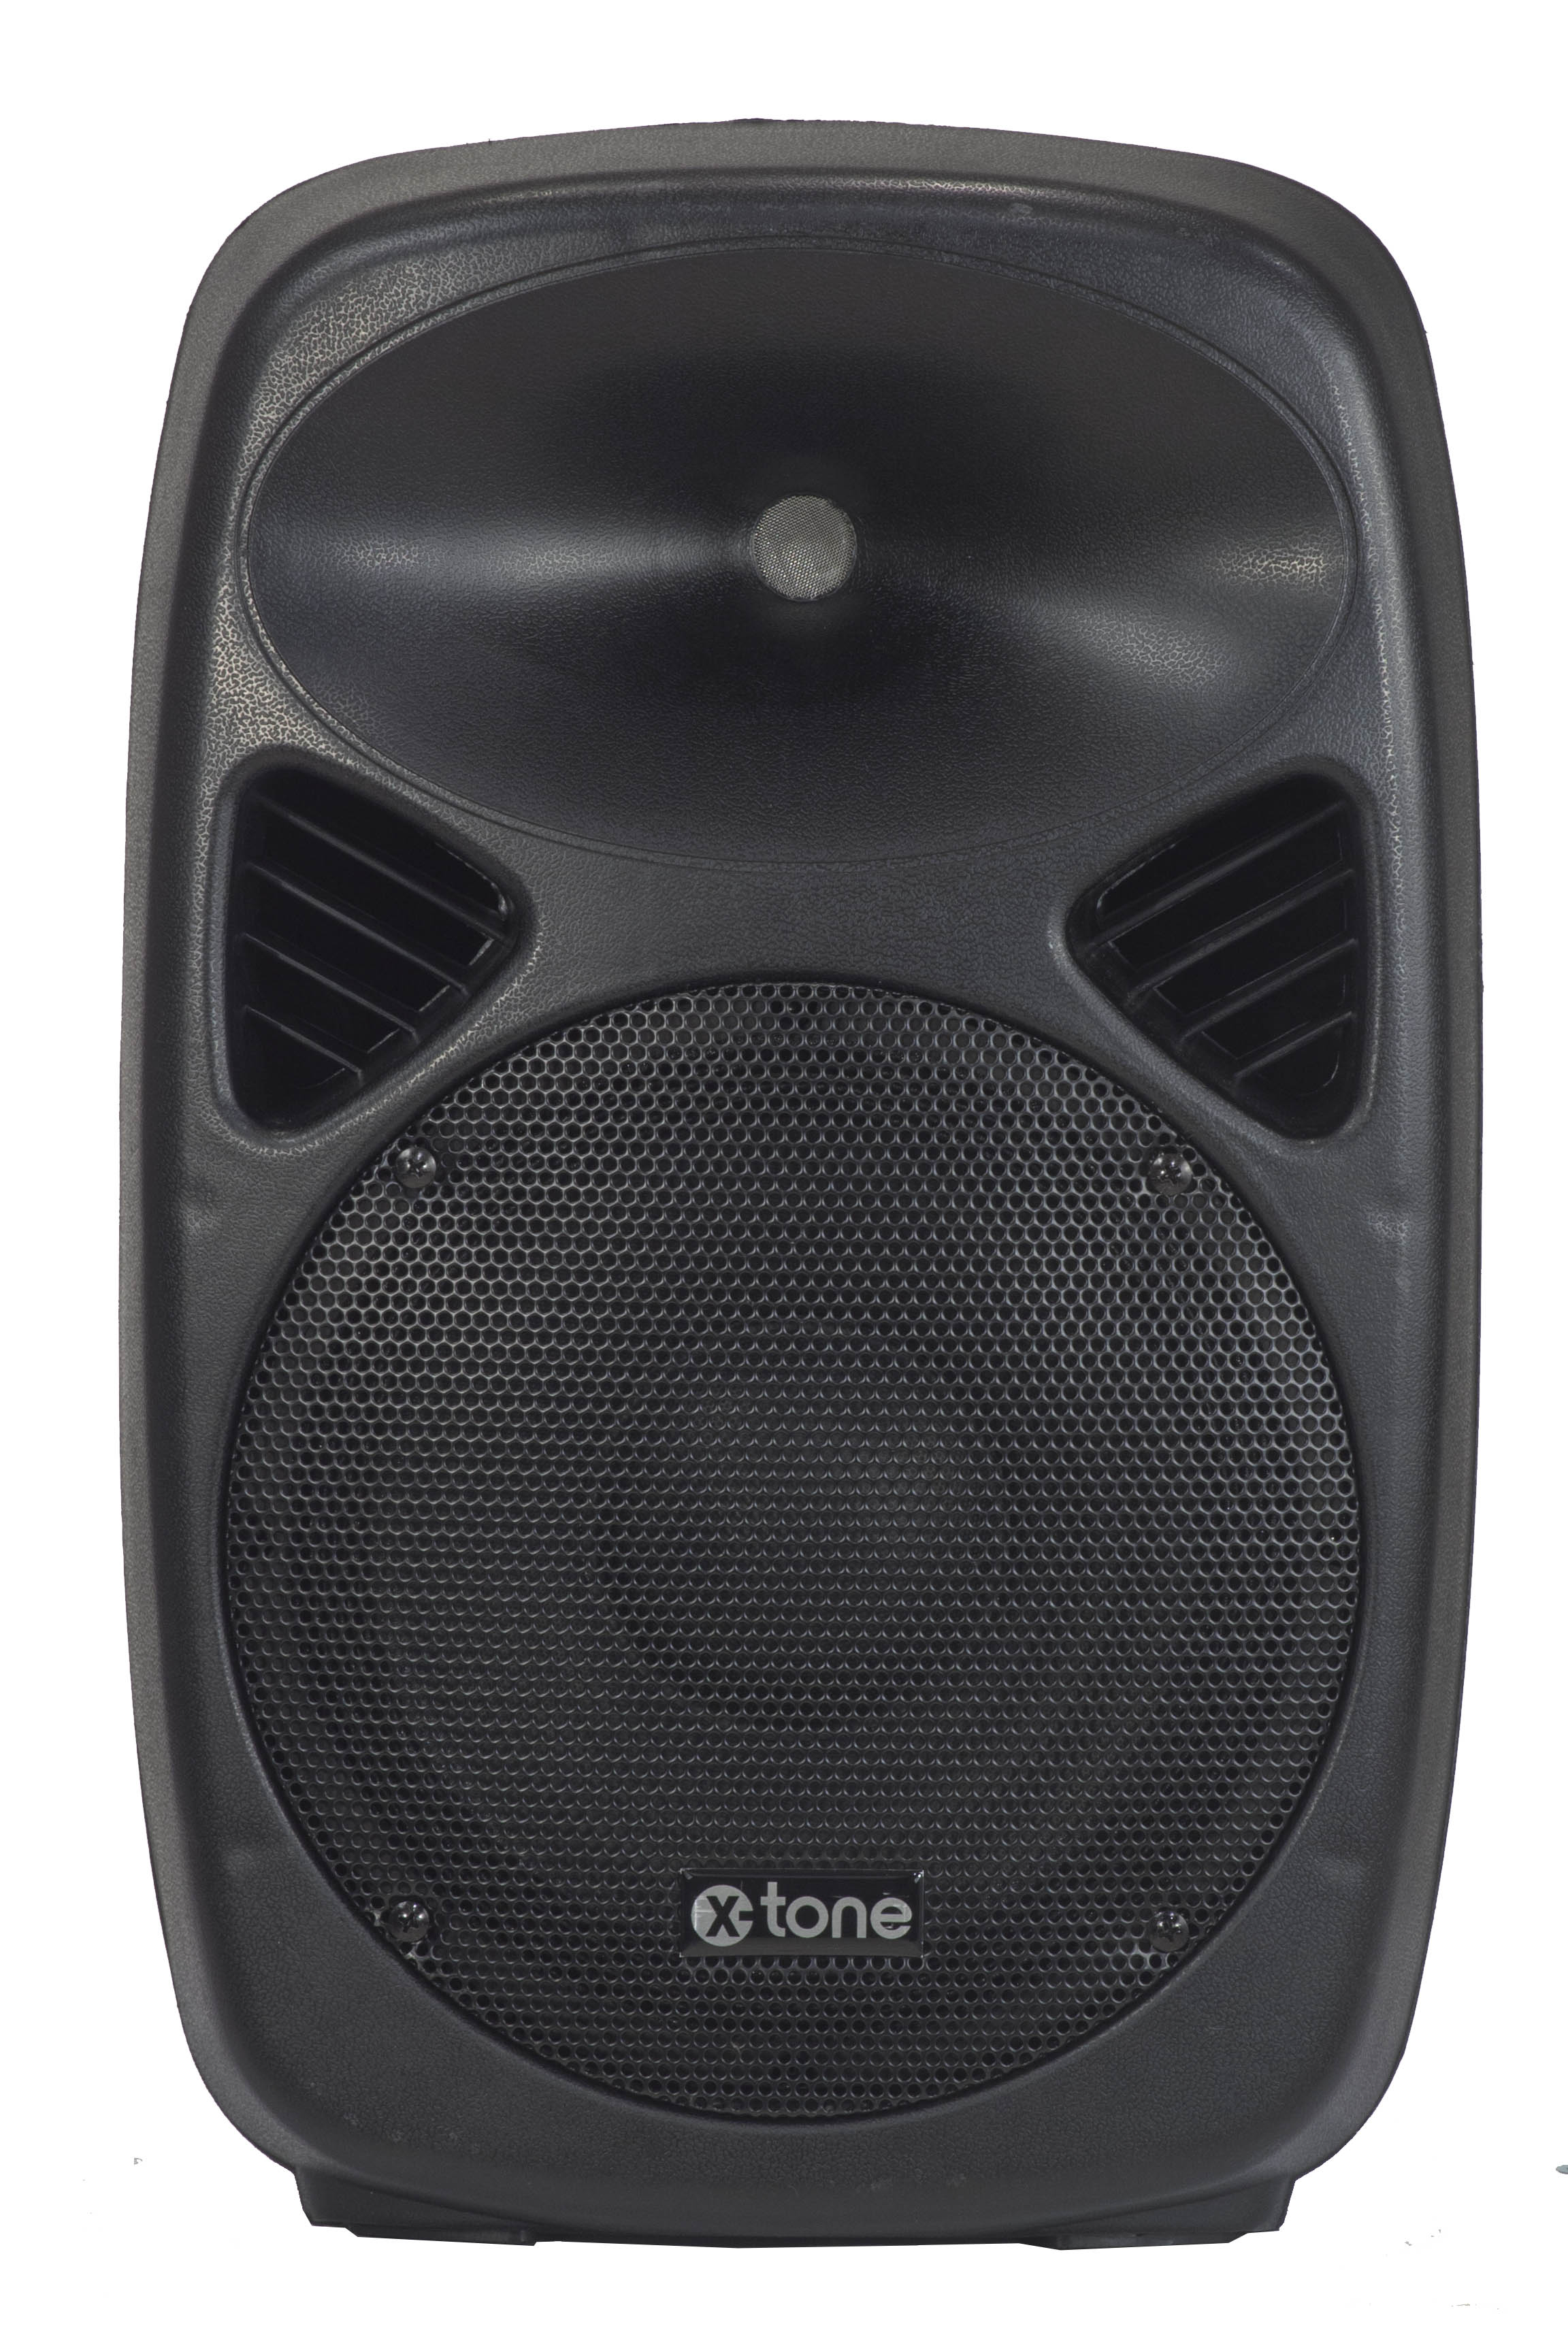 X-tone Sma-10 - Actieve luidspreker - Variation 1